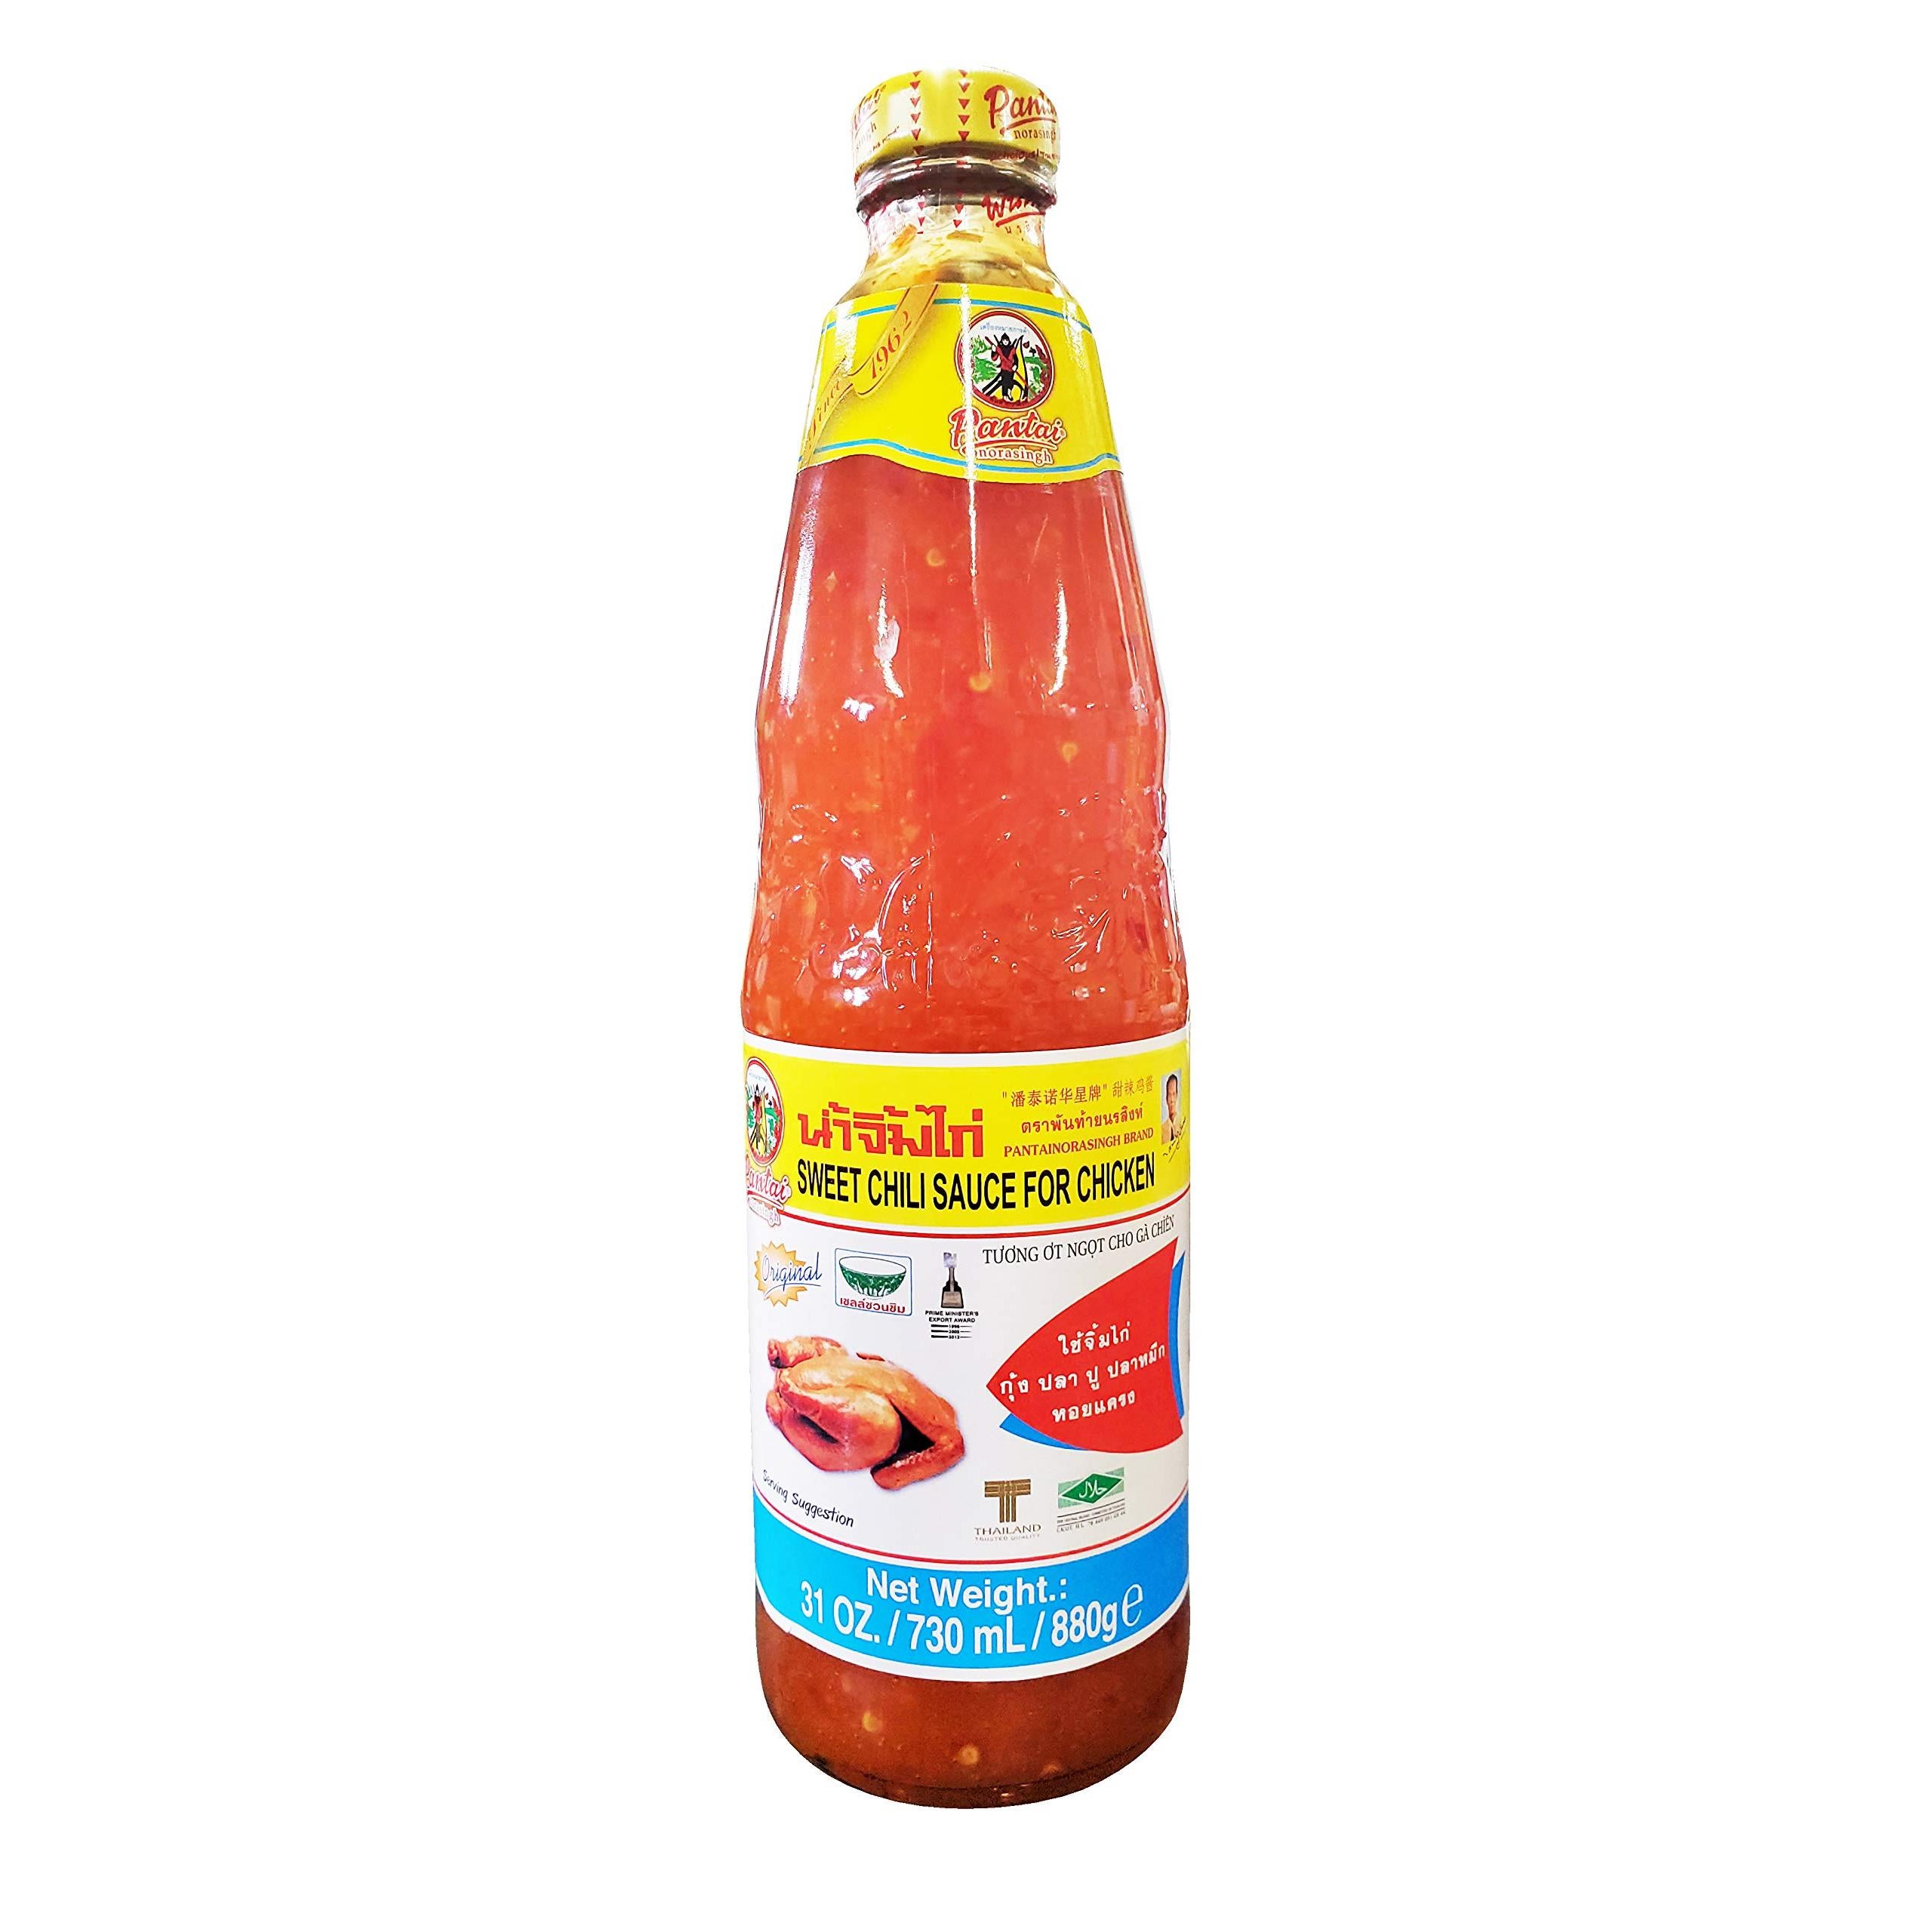 Pantai Norasingh Sweet Chili Sauce for Chicken, 31oz